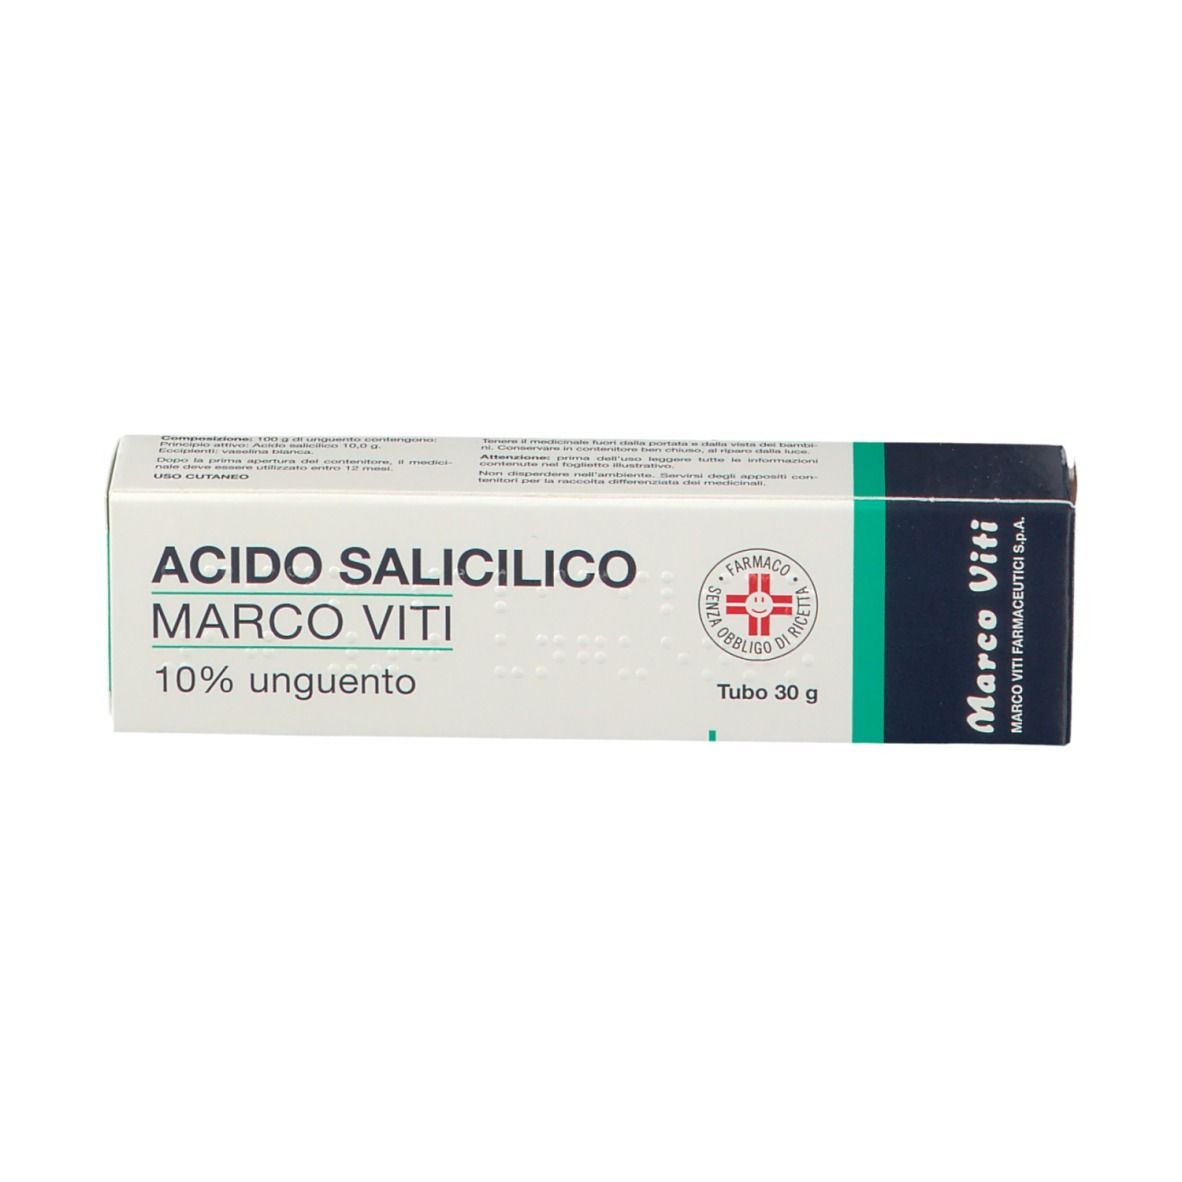 Marco Viti Acido Salicilico 10% Unguento